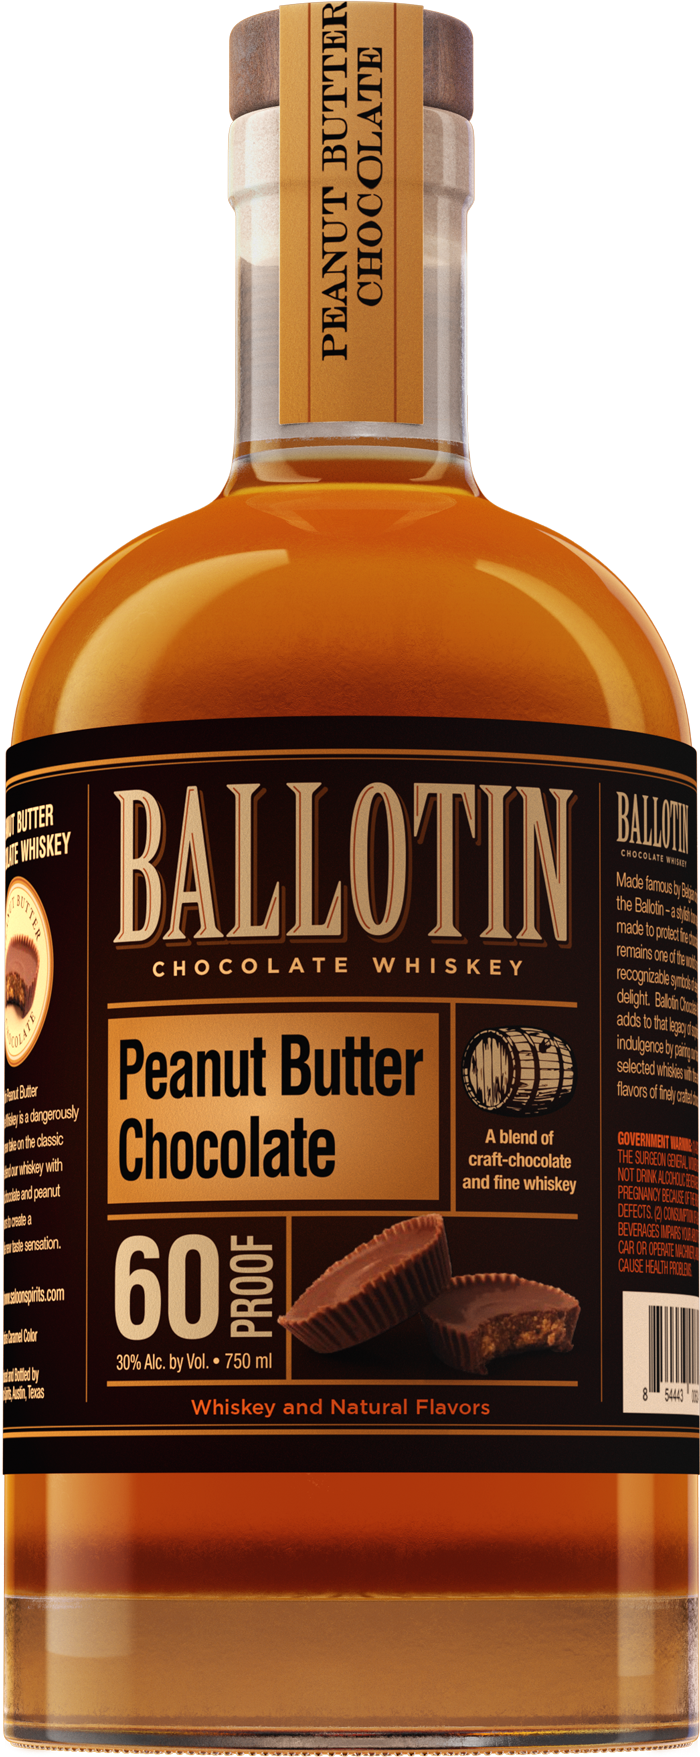 BALLOTIN PEANUT BUTTER CHOCOLA Flavored Whiskey BeverageWarehouse